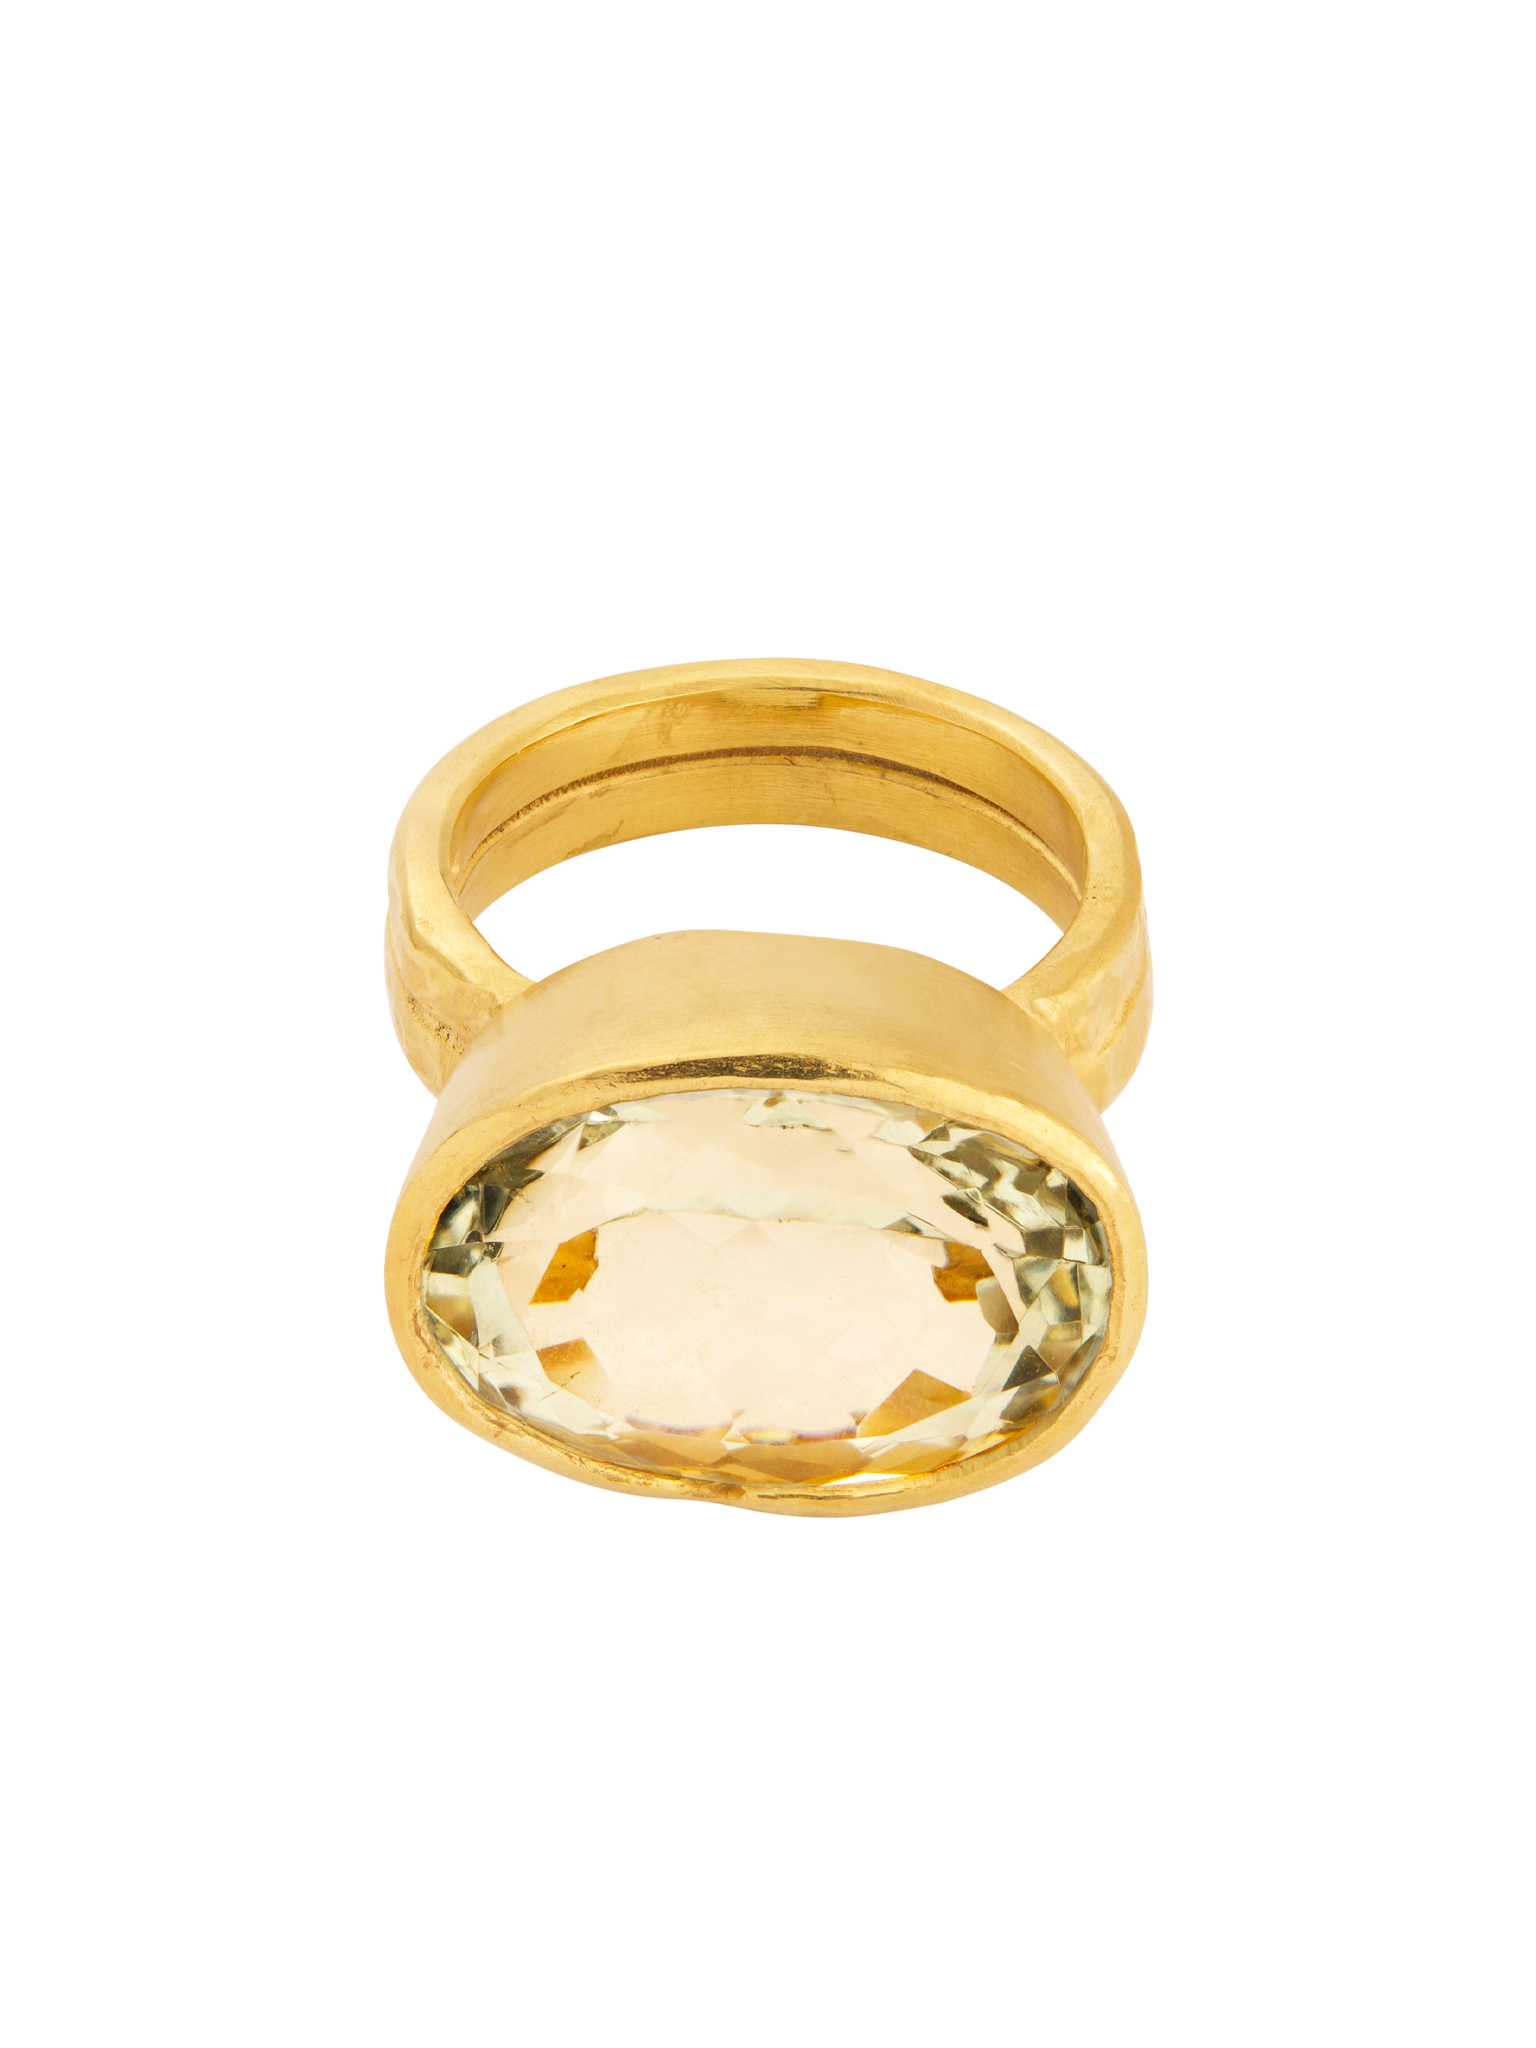 18kt gold vermeil green amethyst ring